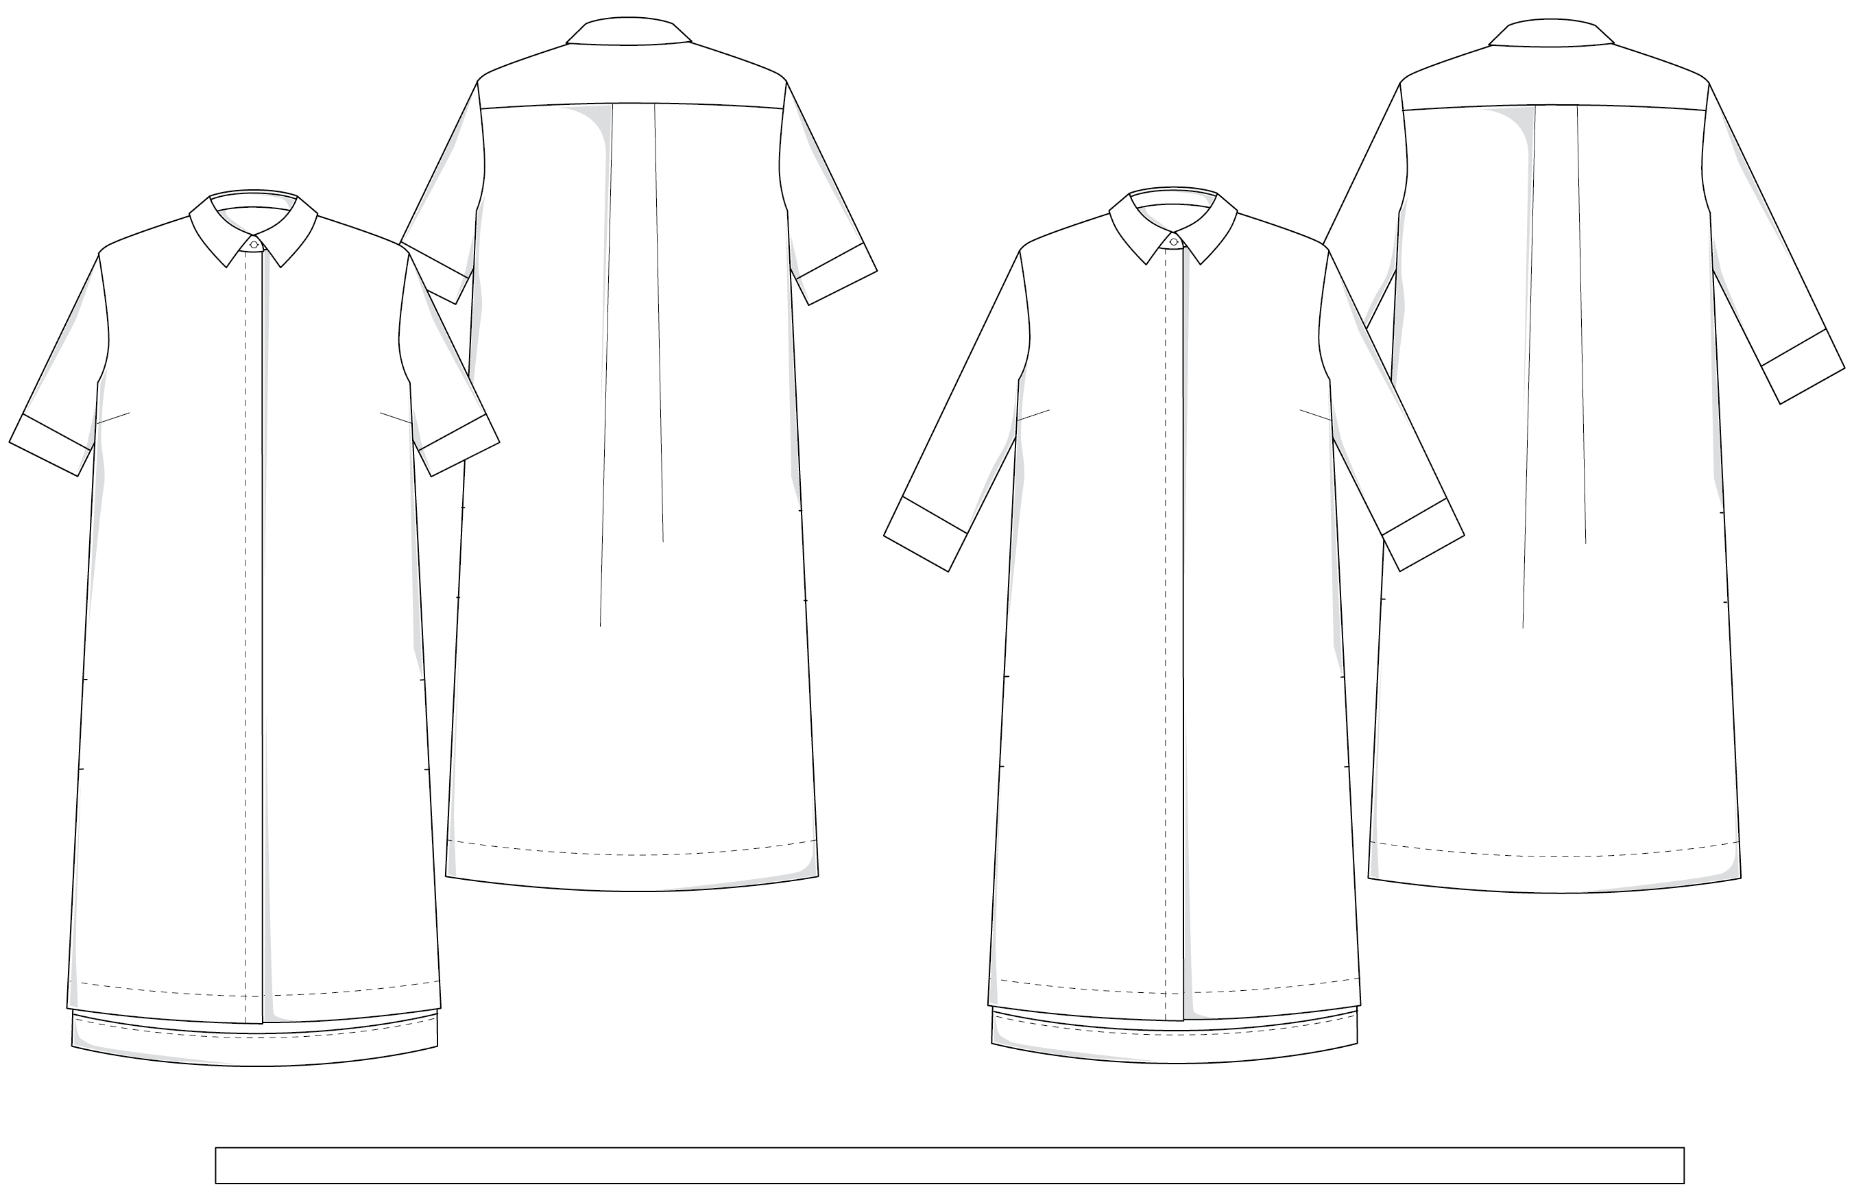 Technical Drawing Shirtdress With Hidden Buttons